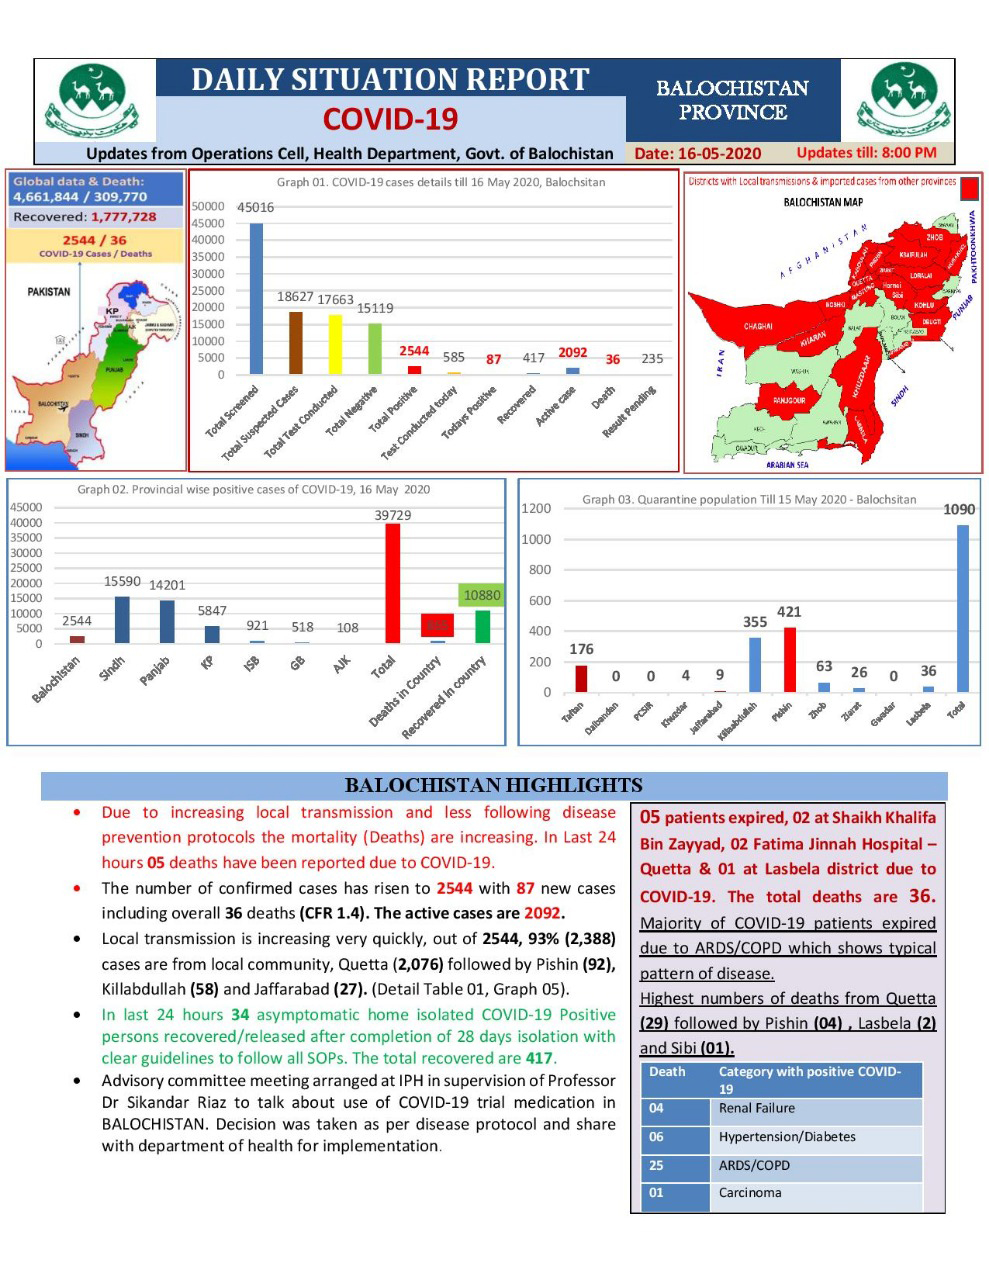 Coronavirus updates, May 16: Latest news on the COVID-19 pandemic from Pakistan and around the world